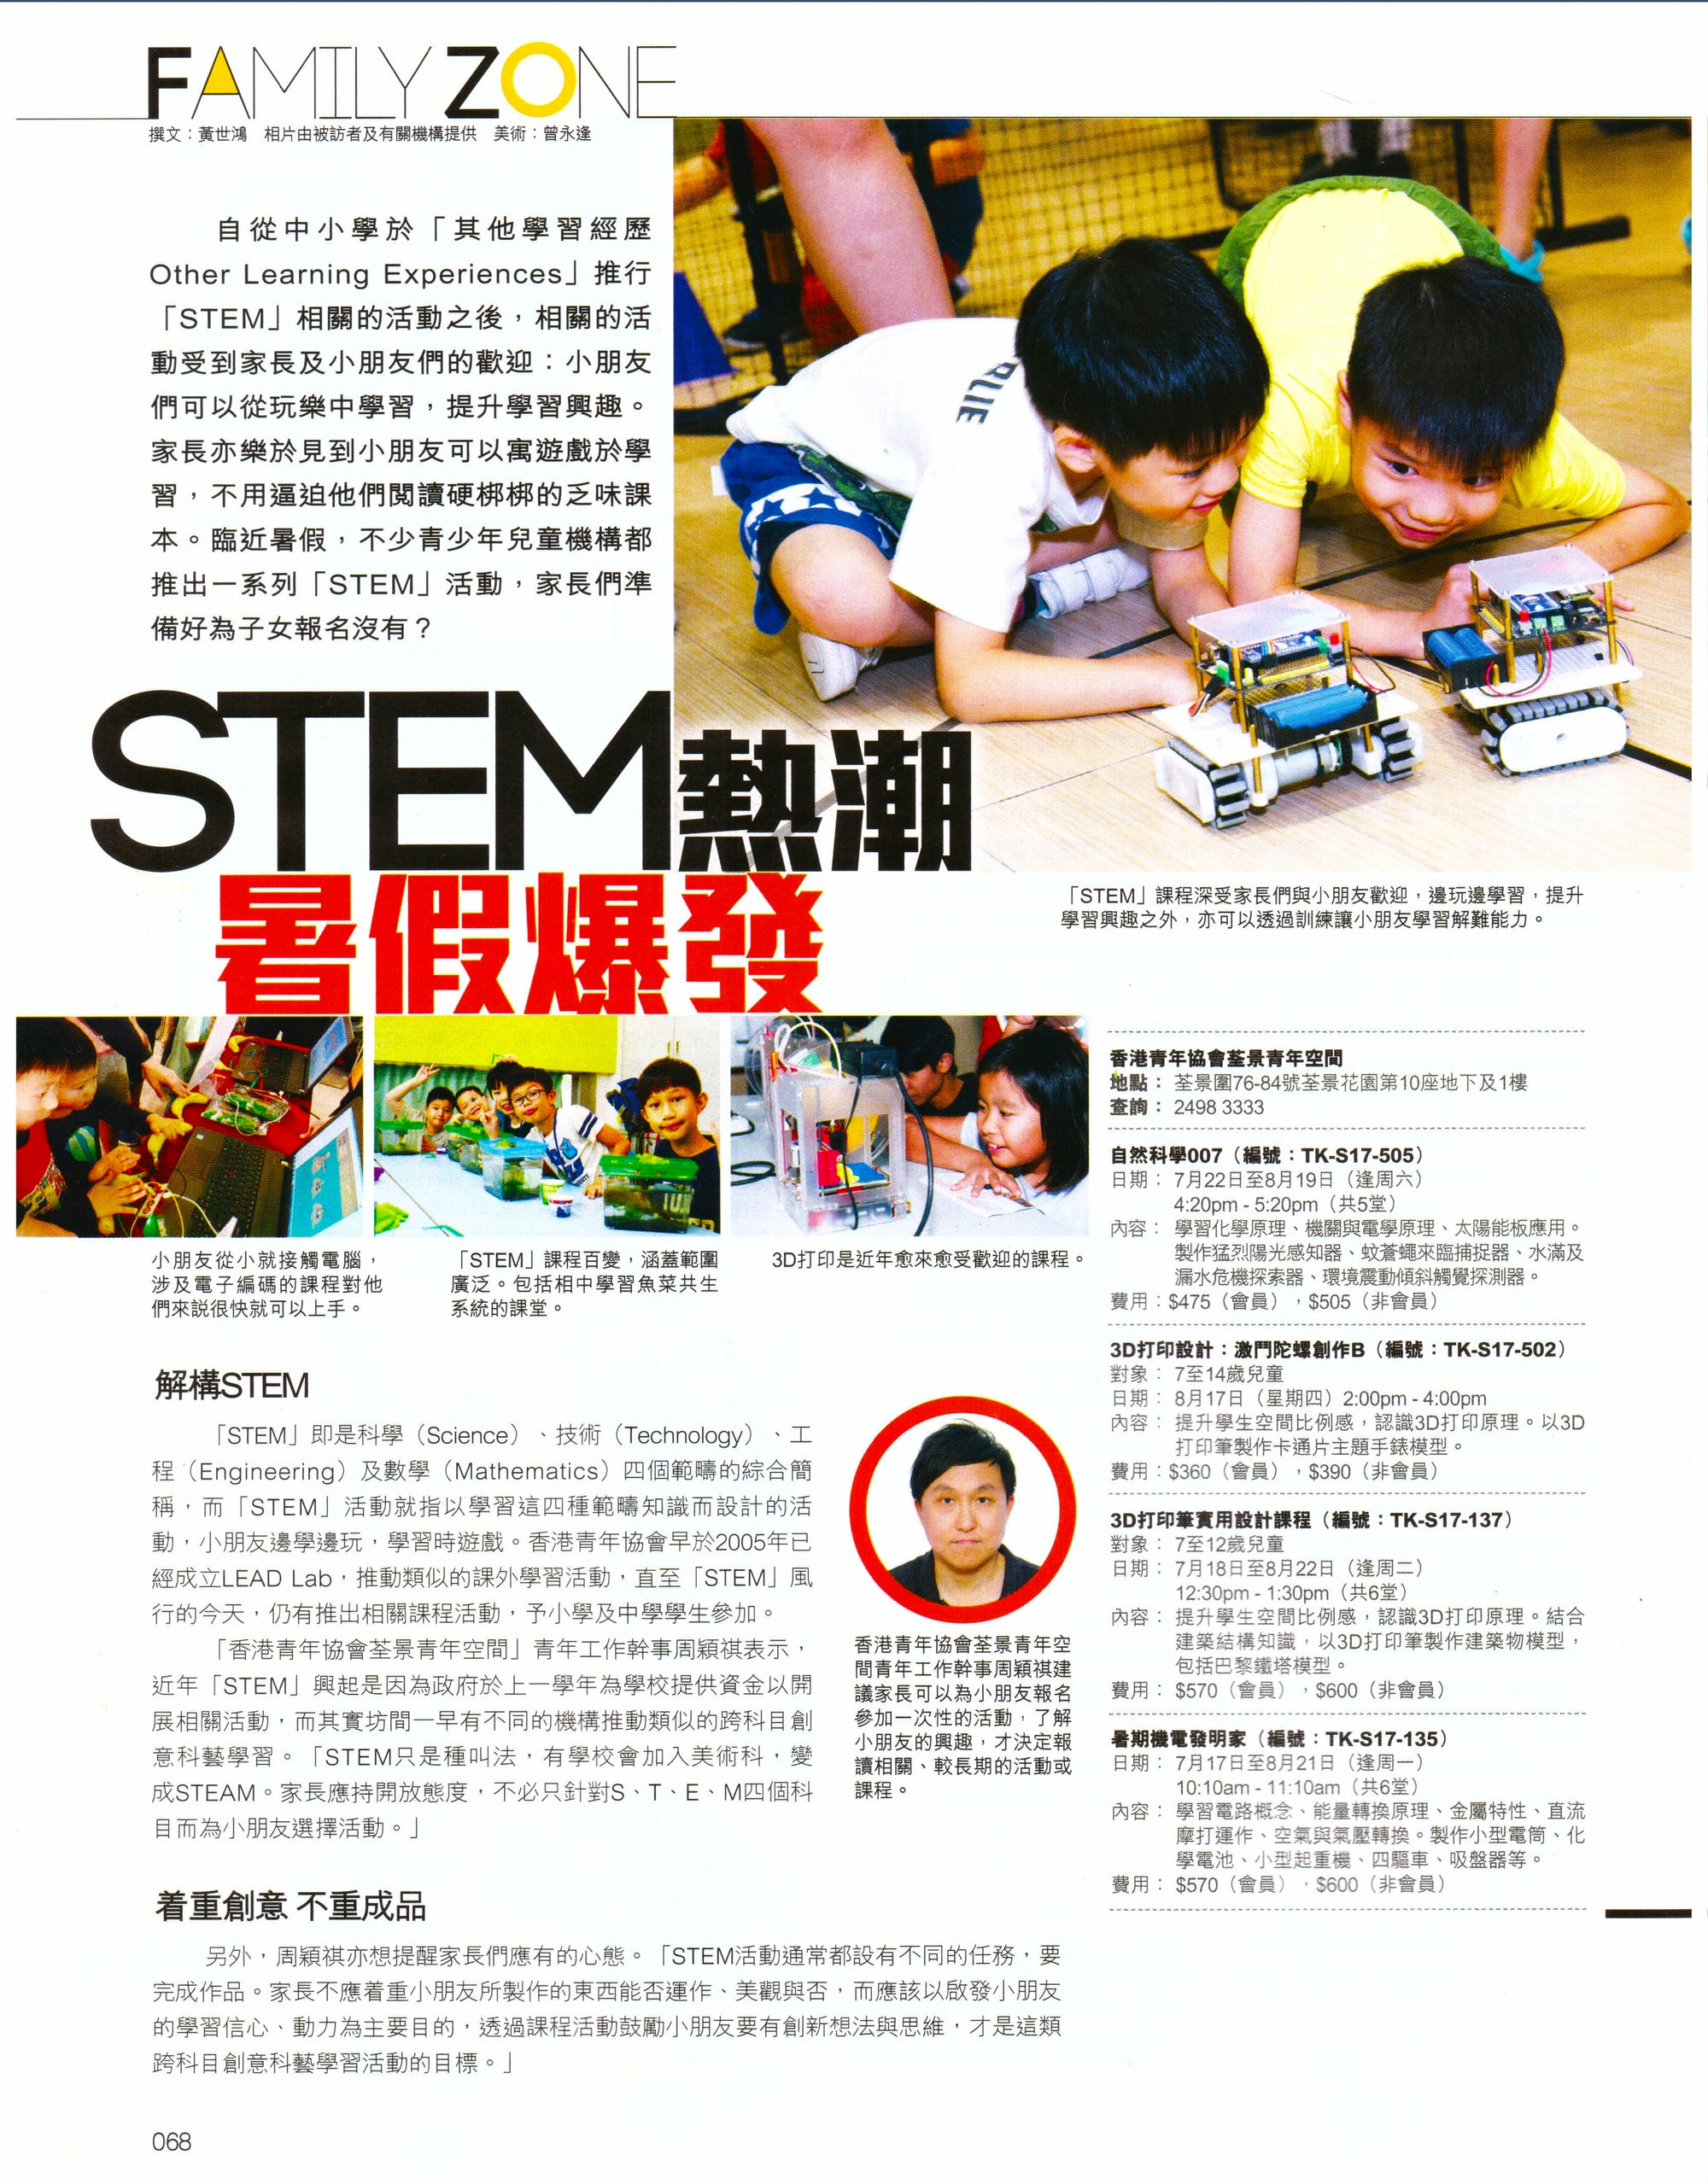 Featured in TVB周刊: STEM 熱潮暑假爆發